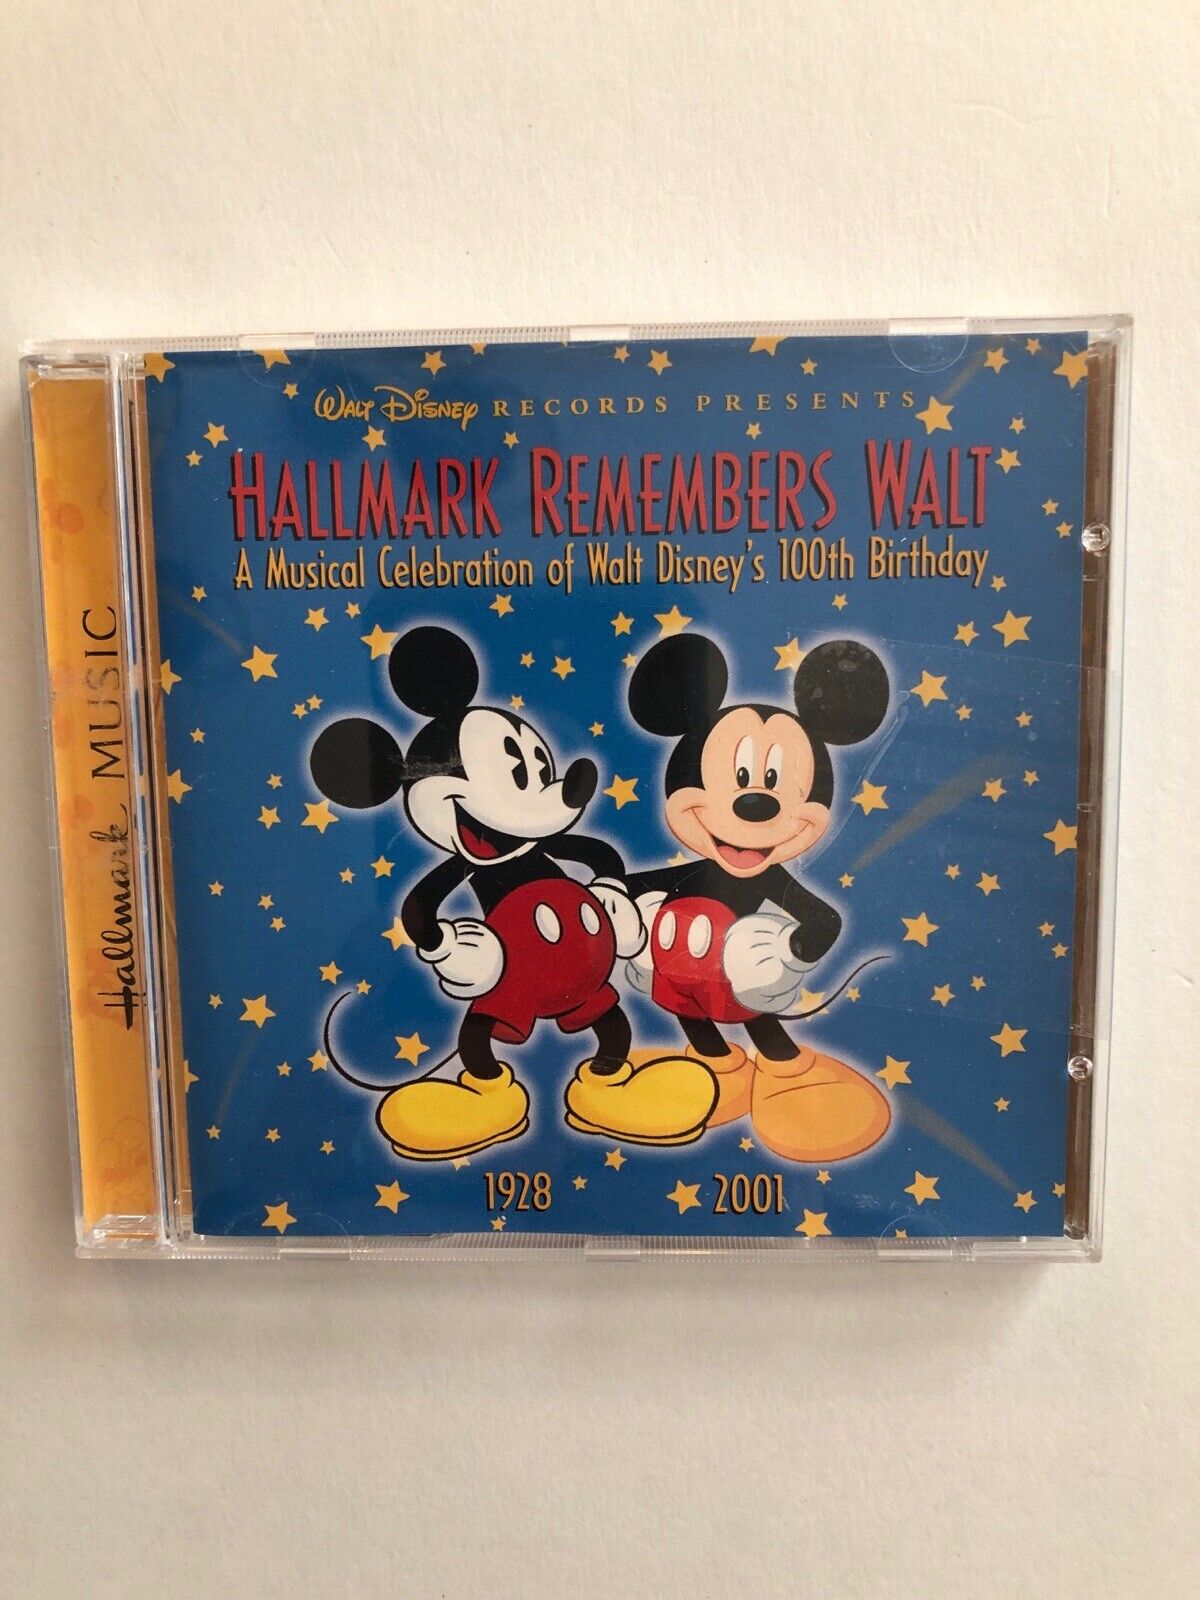 Hallmark Remembers Walt: A Musical Celebration of Walt Disneys 100th Birthday CD